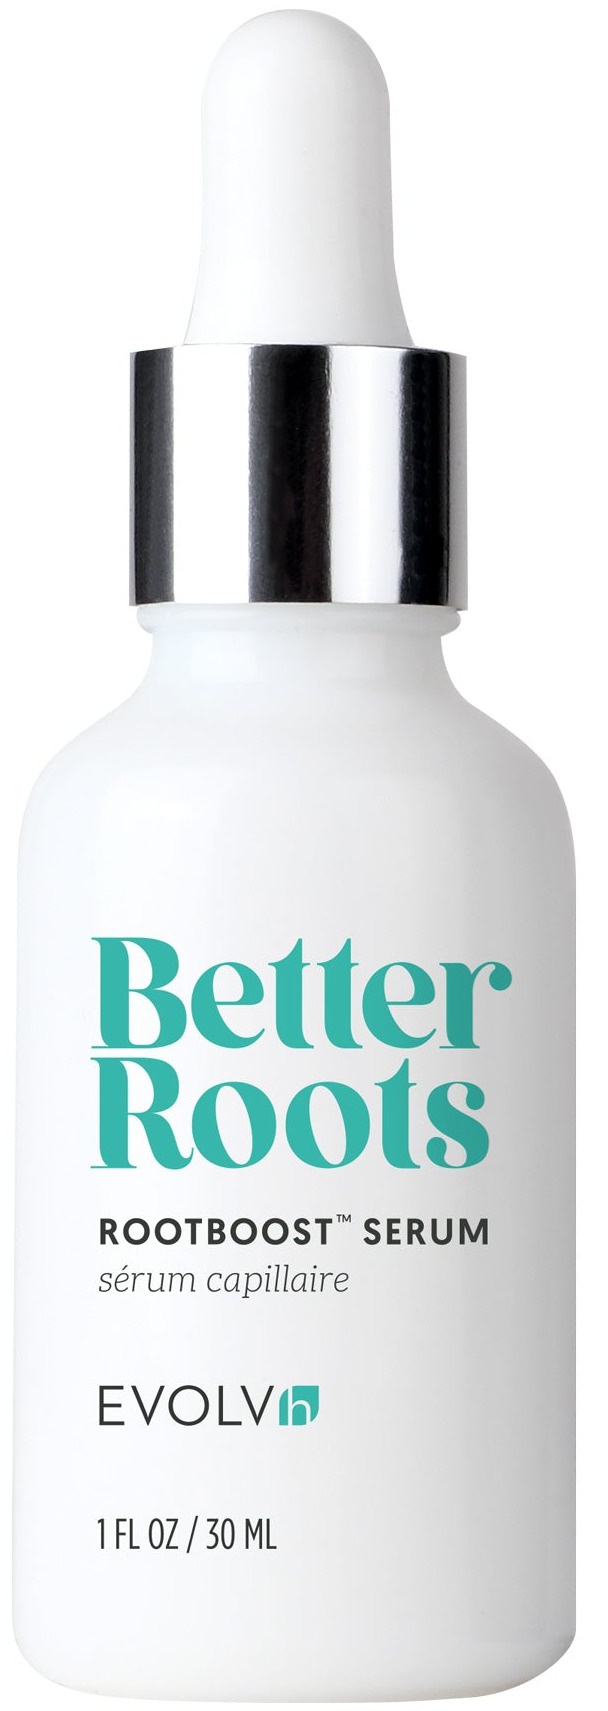 EVOLVh Better Roots Rootboost Serum